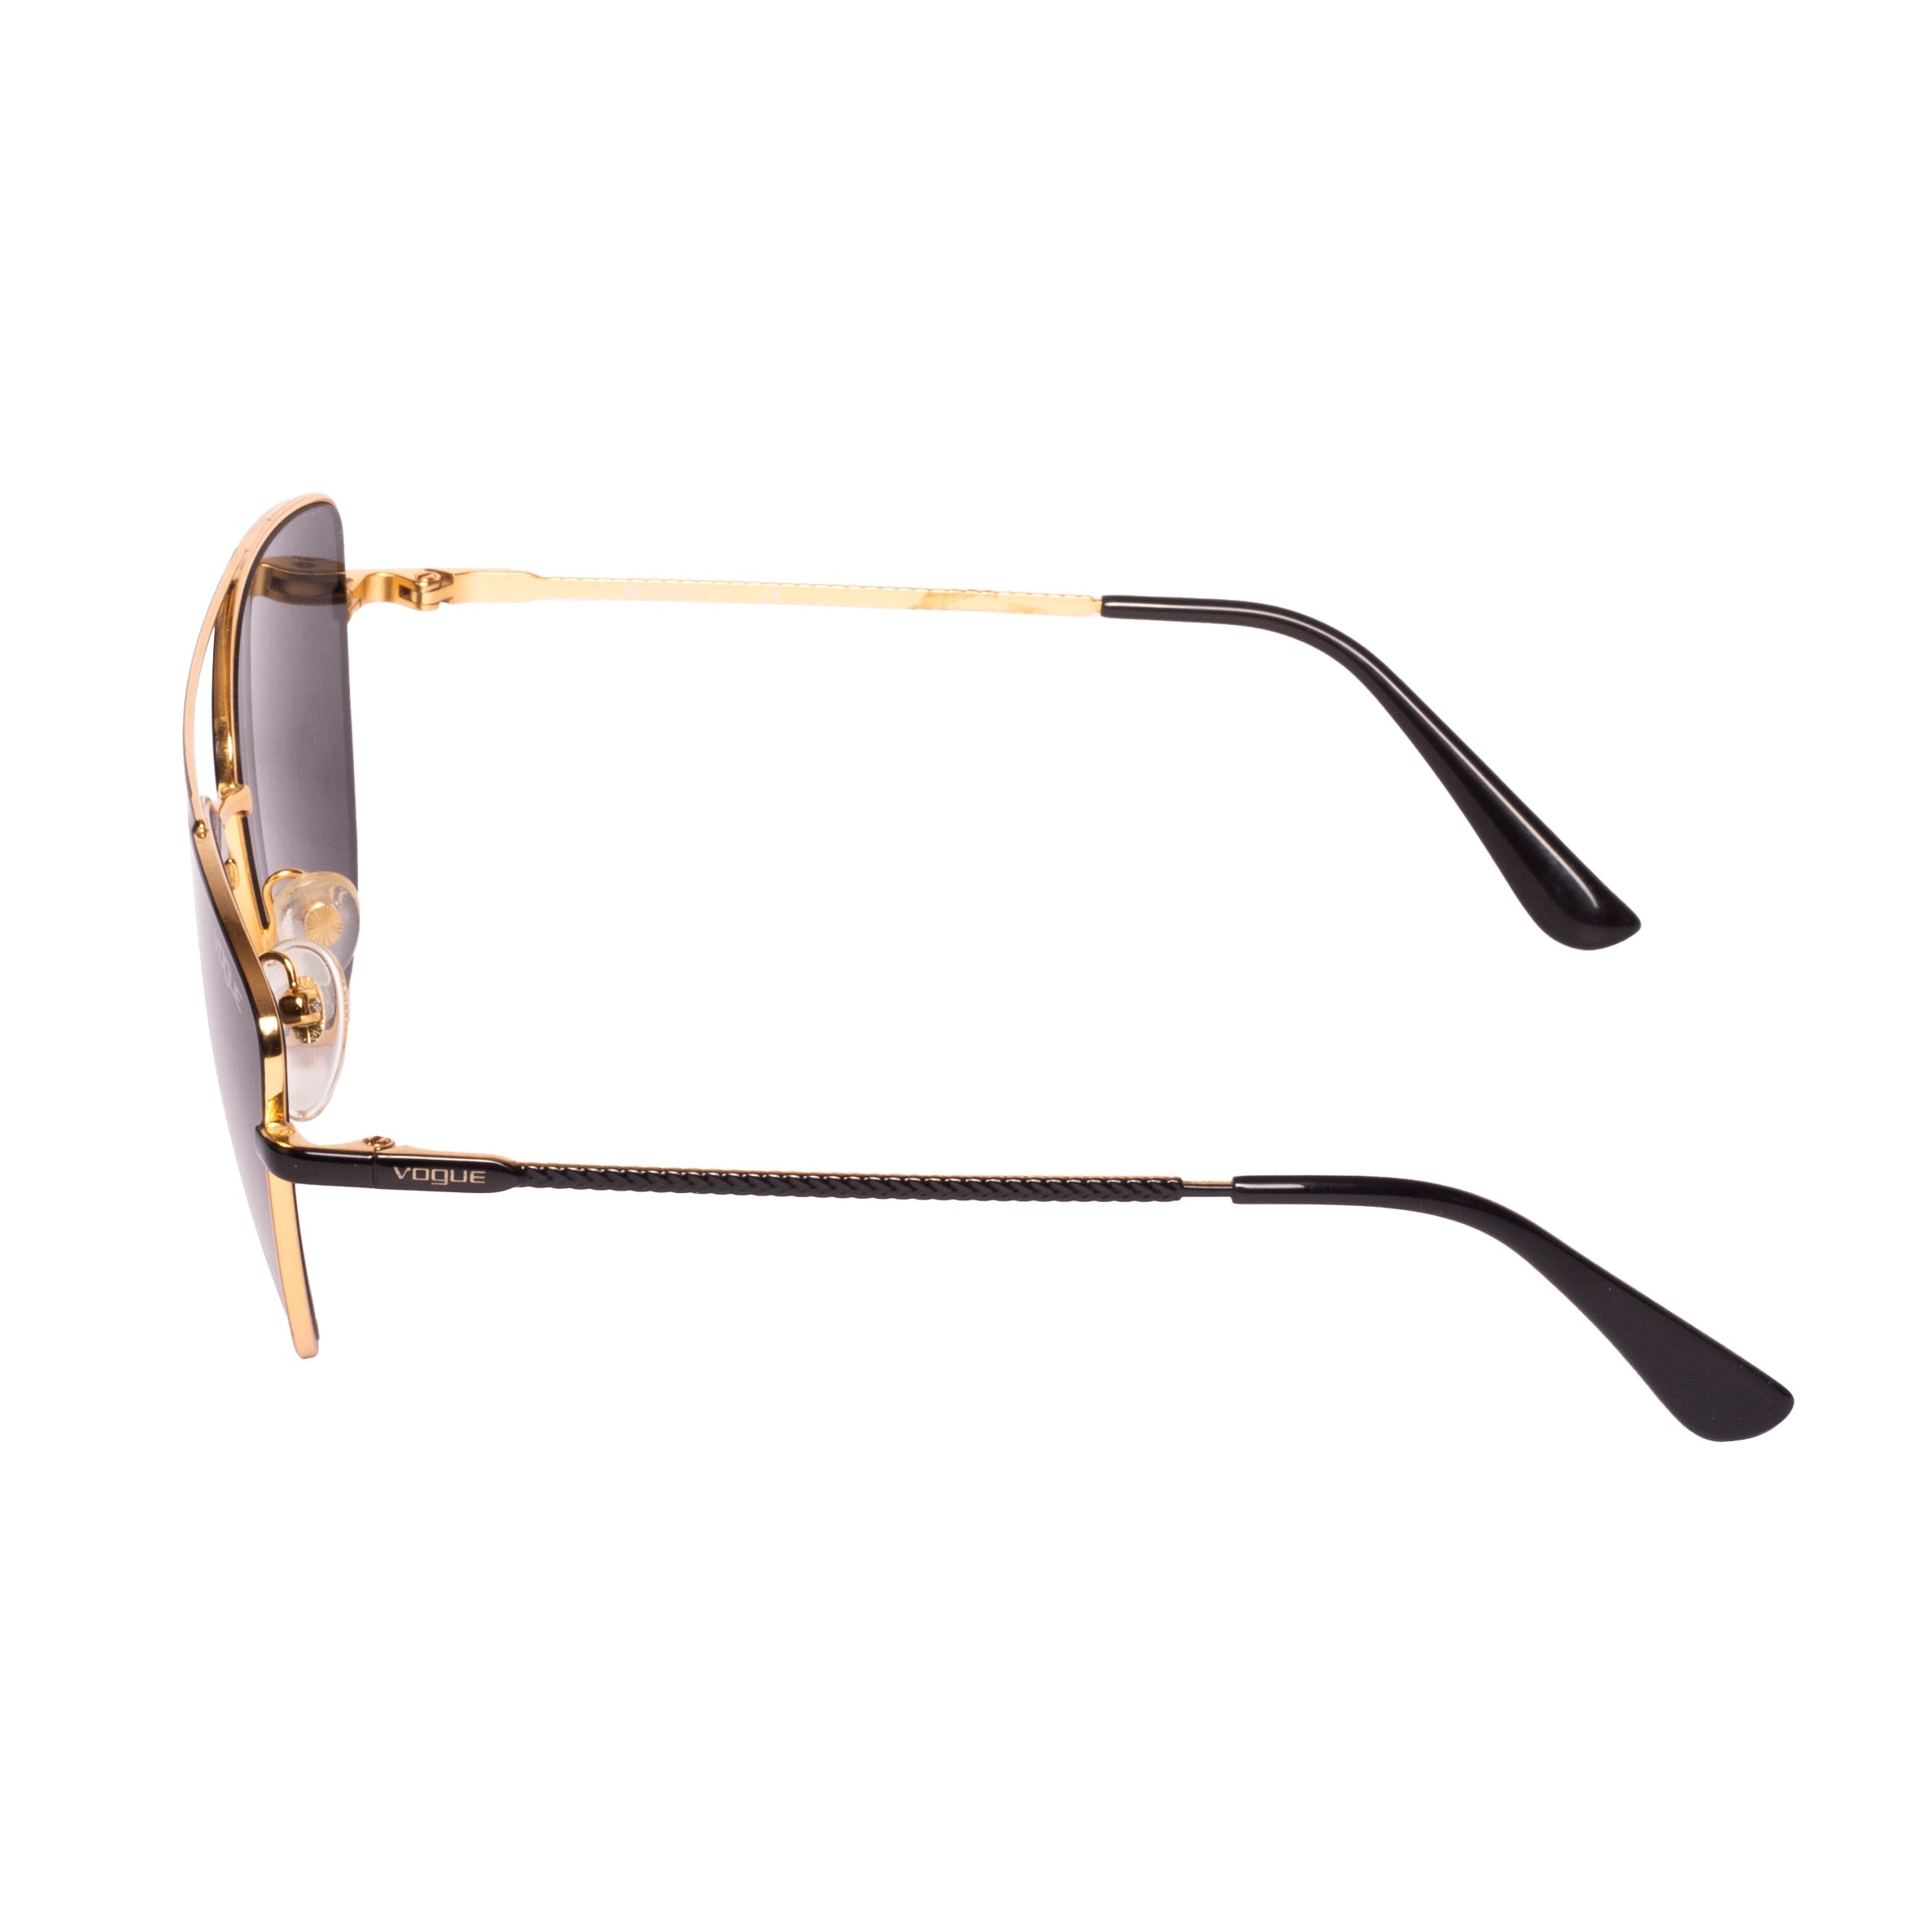 Vogue-0VO4130S-56-280/87 Sunglasses - Premium Sunglasses from VOGUE - Just Rs. 6190! Shop now at Laxmi Opticians